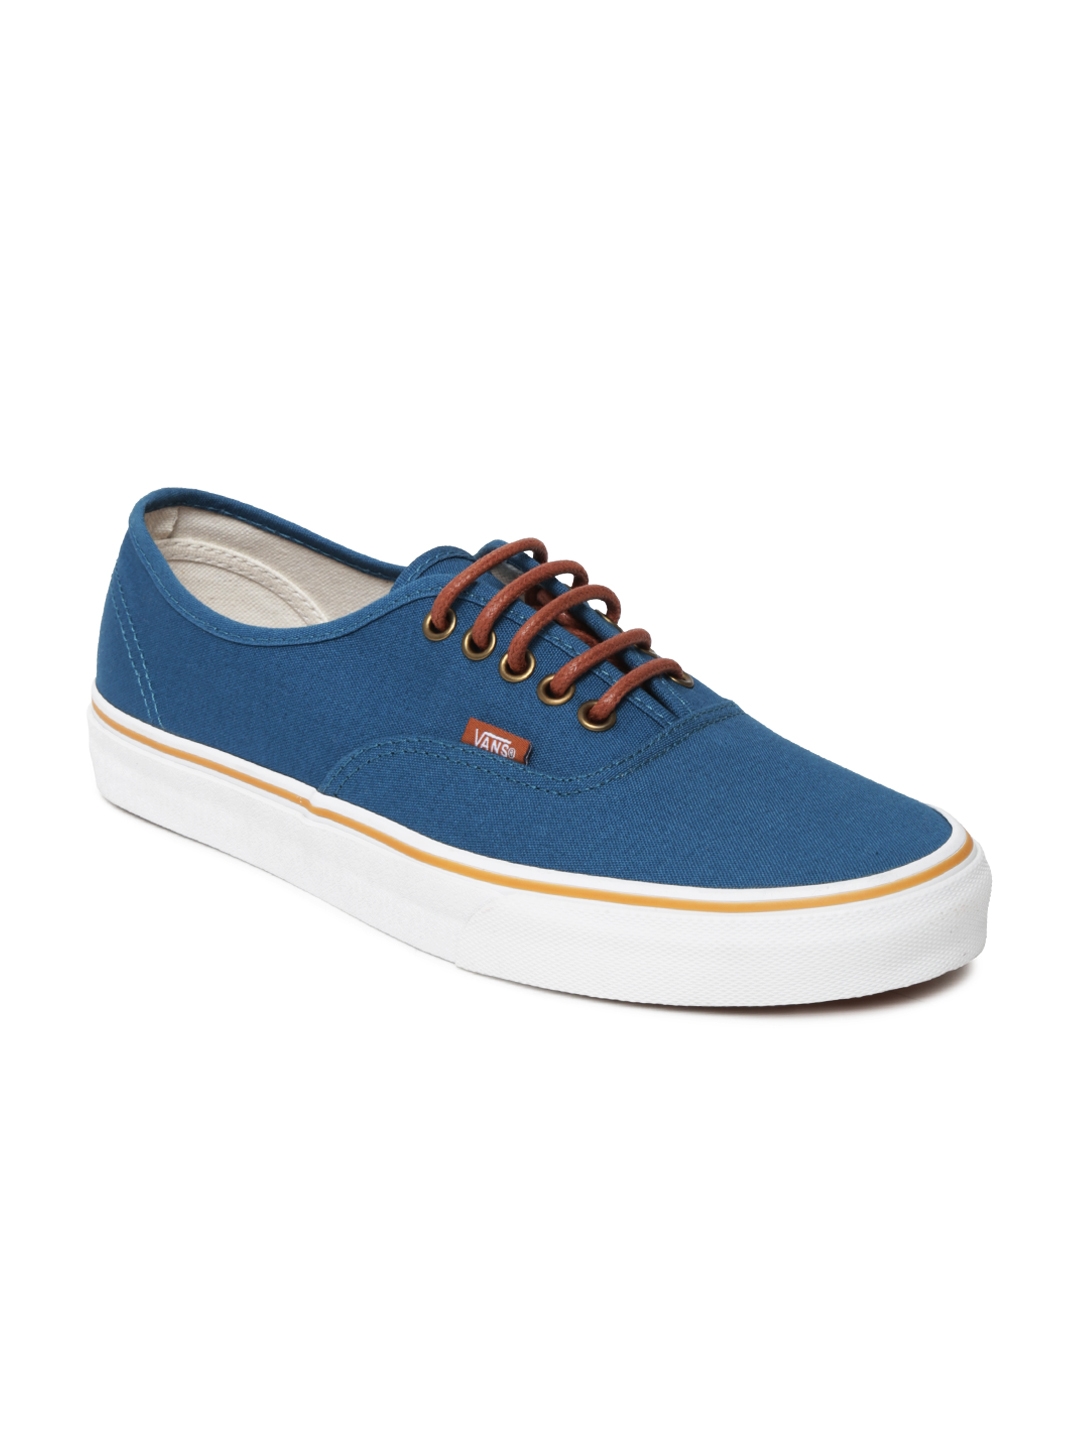 Buy Vans Unisex Teal Blue Casual Shoes 